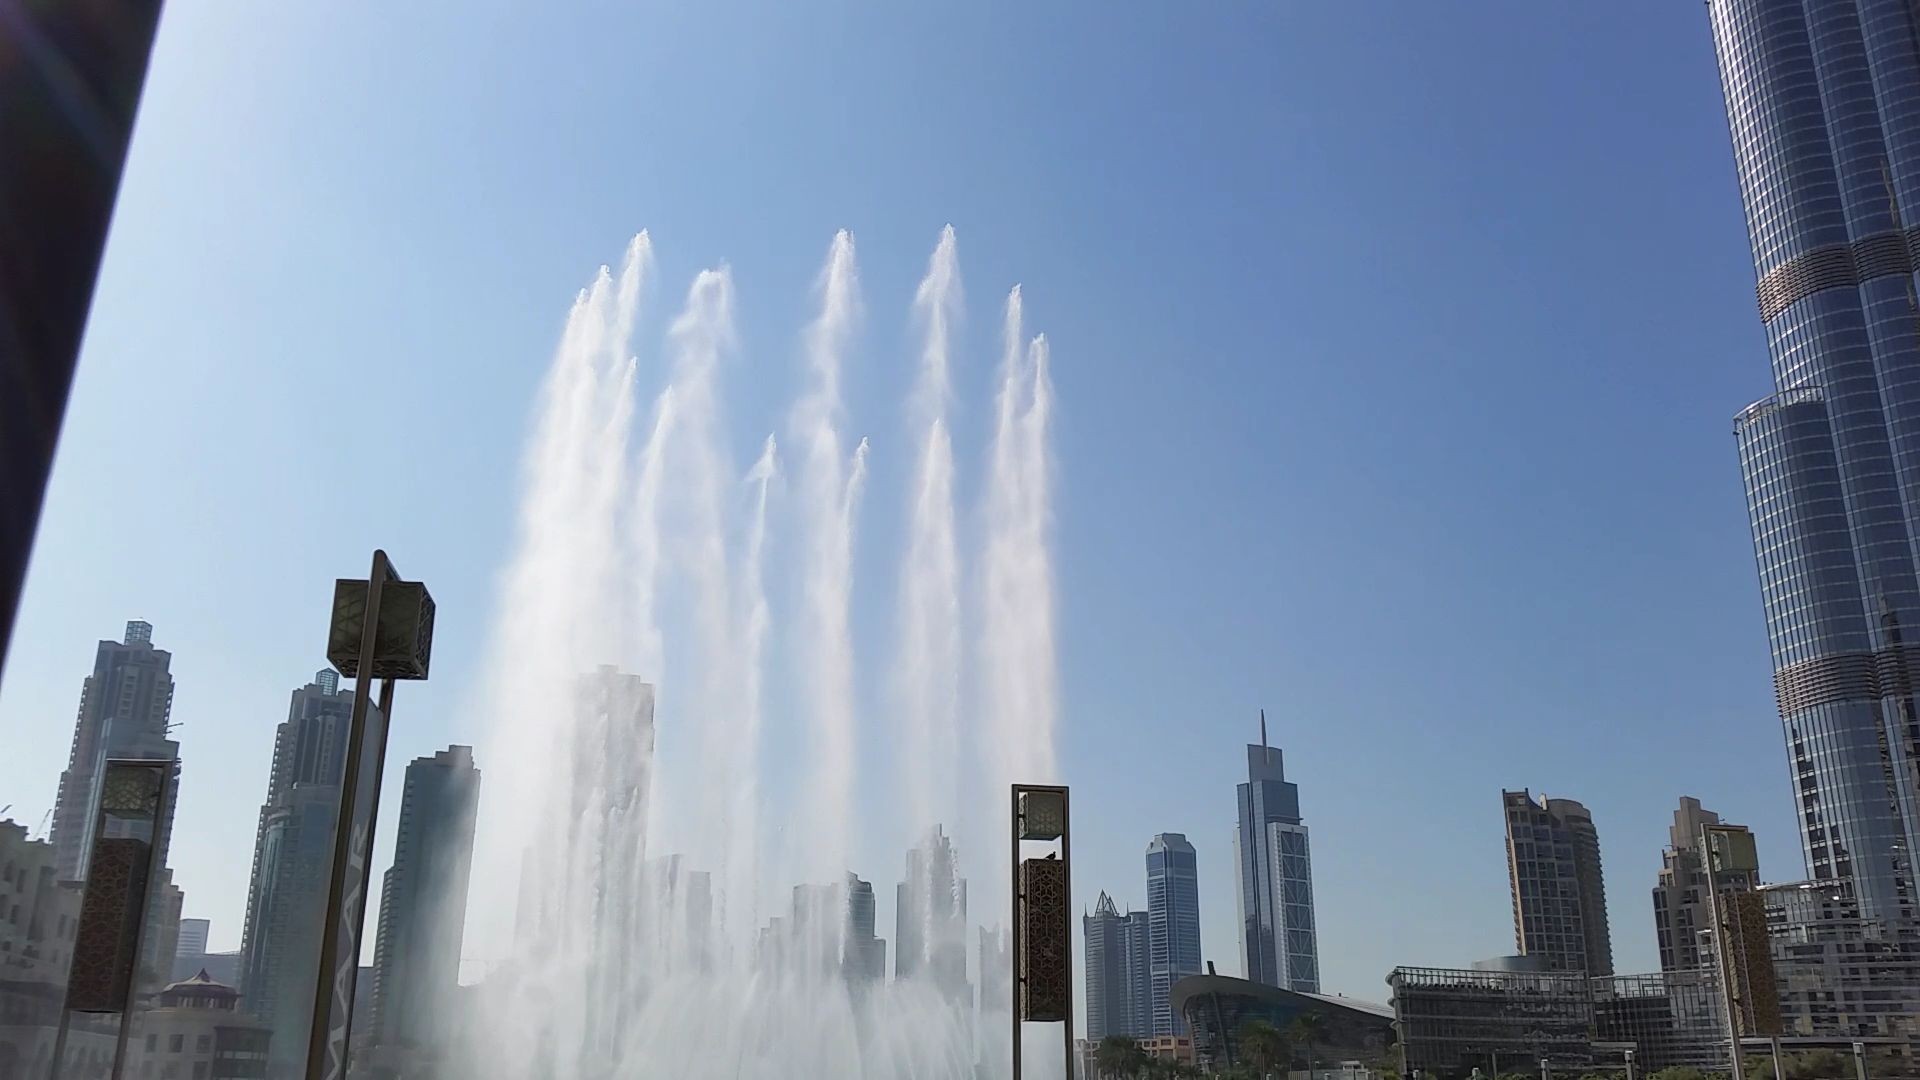 The Dubai Fountain III